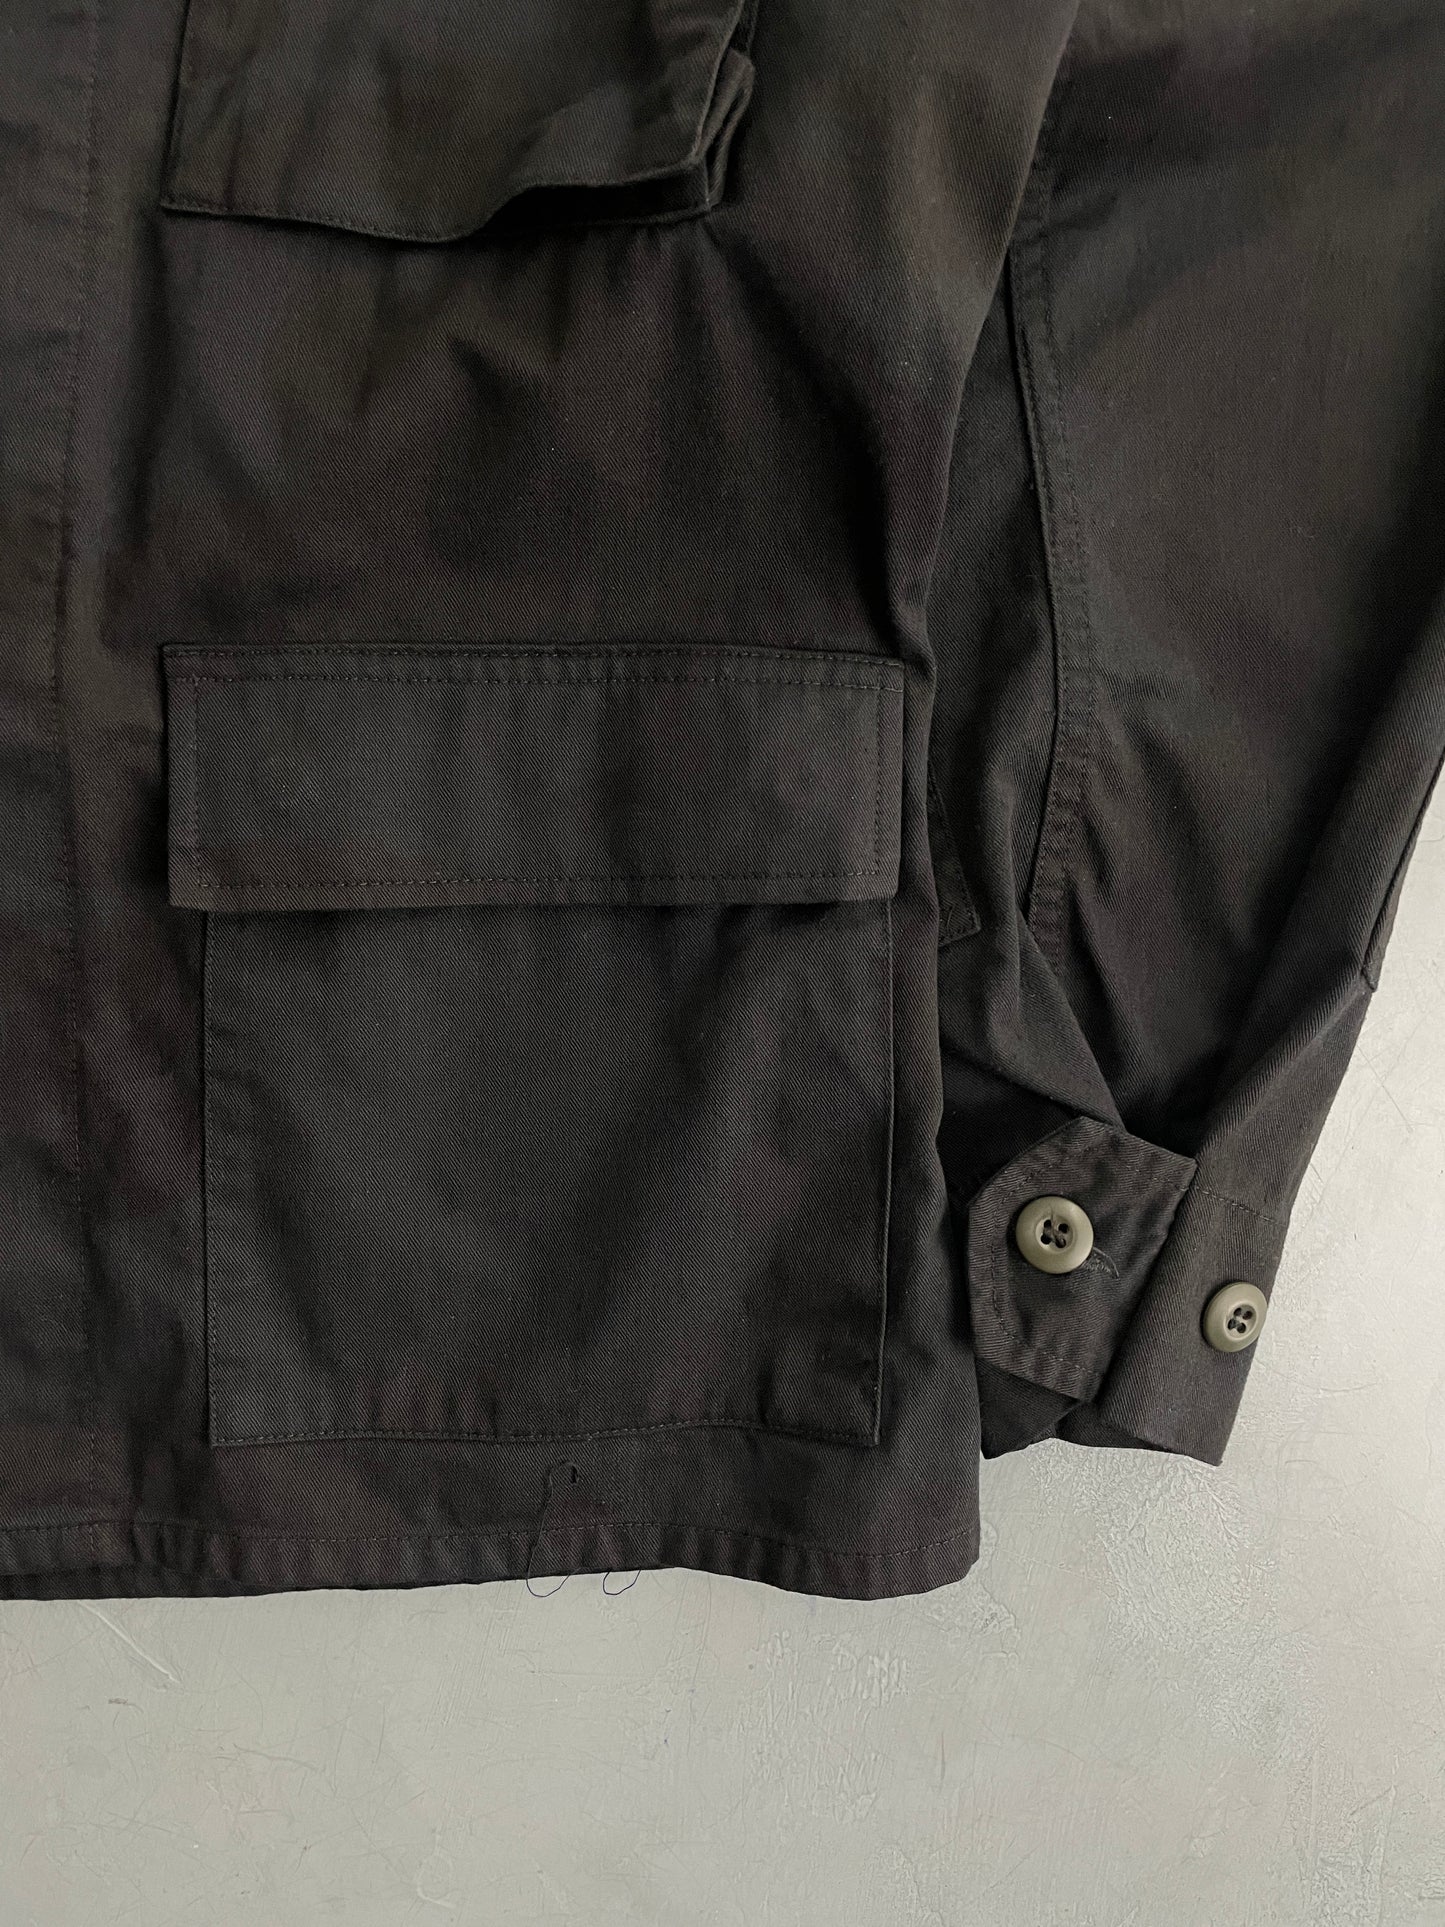 Overdyed US Army Jacket [L]